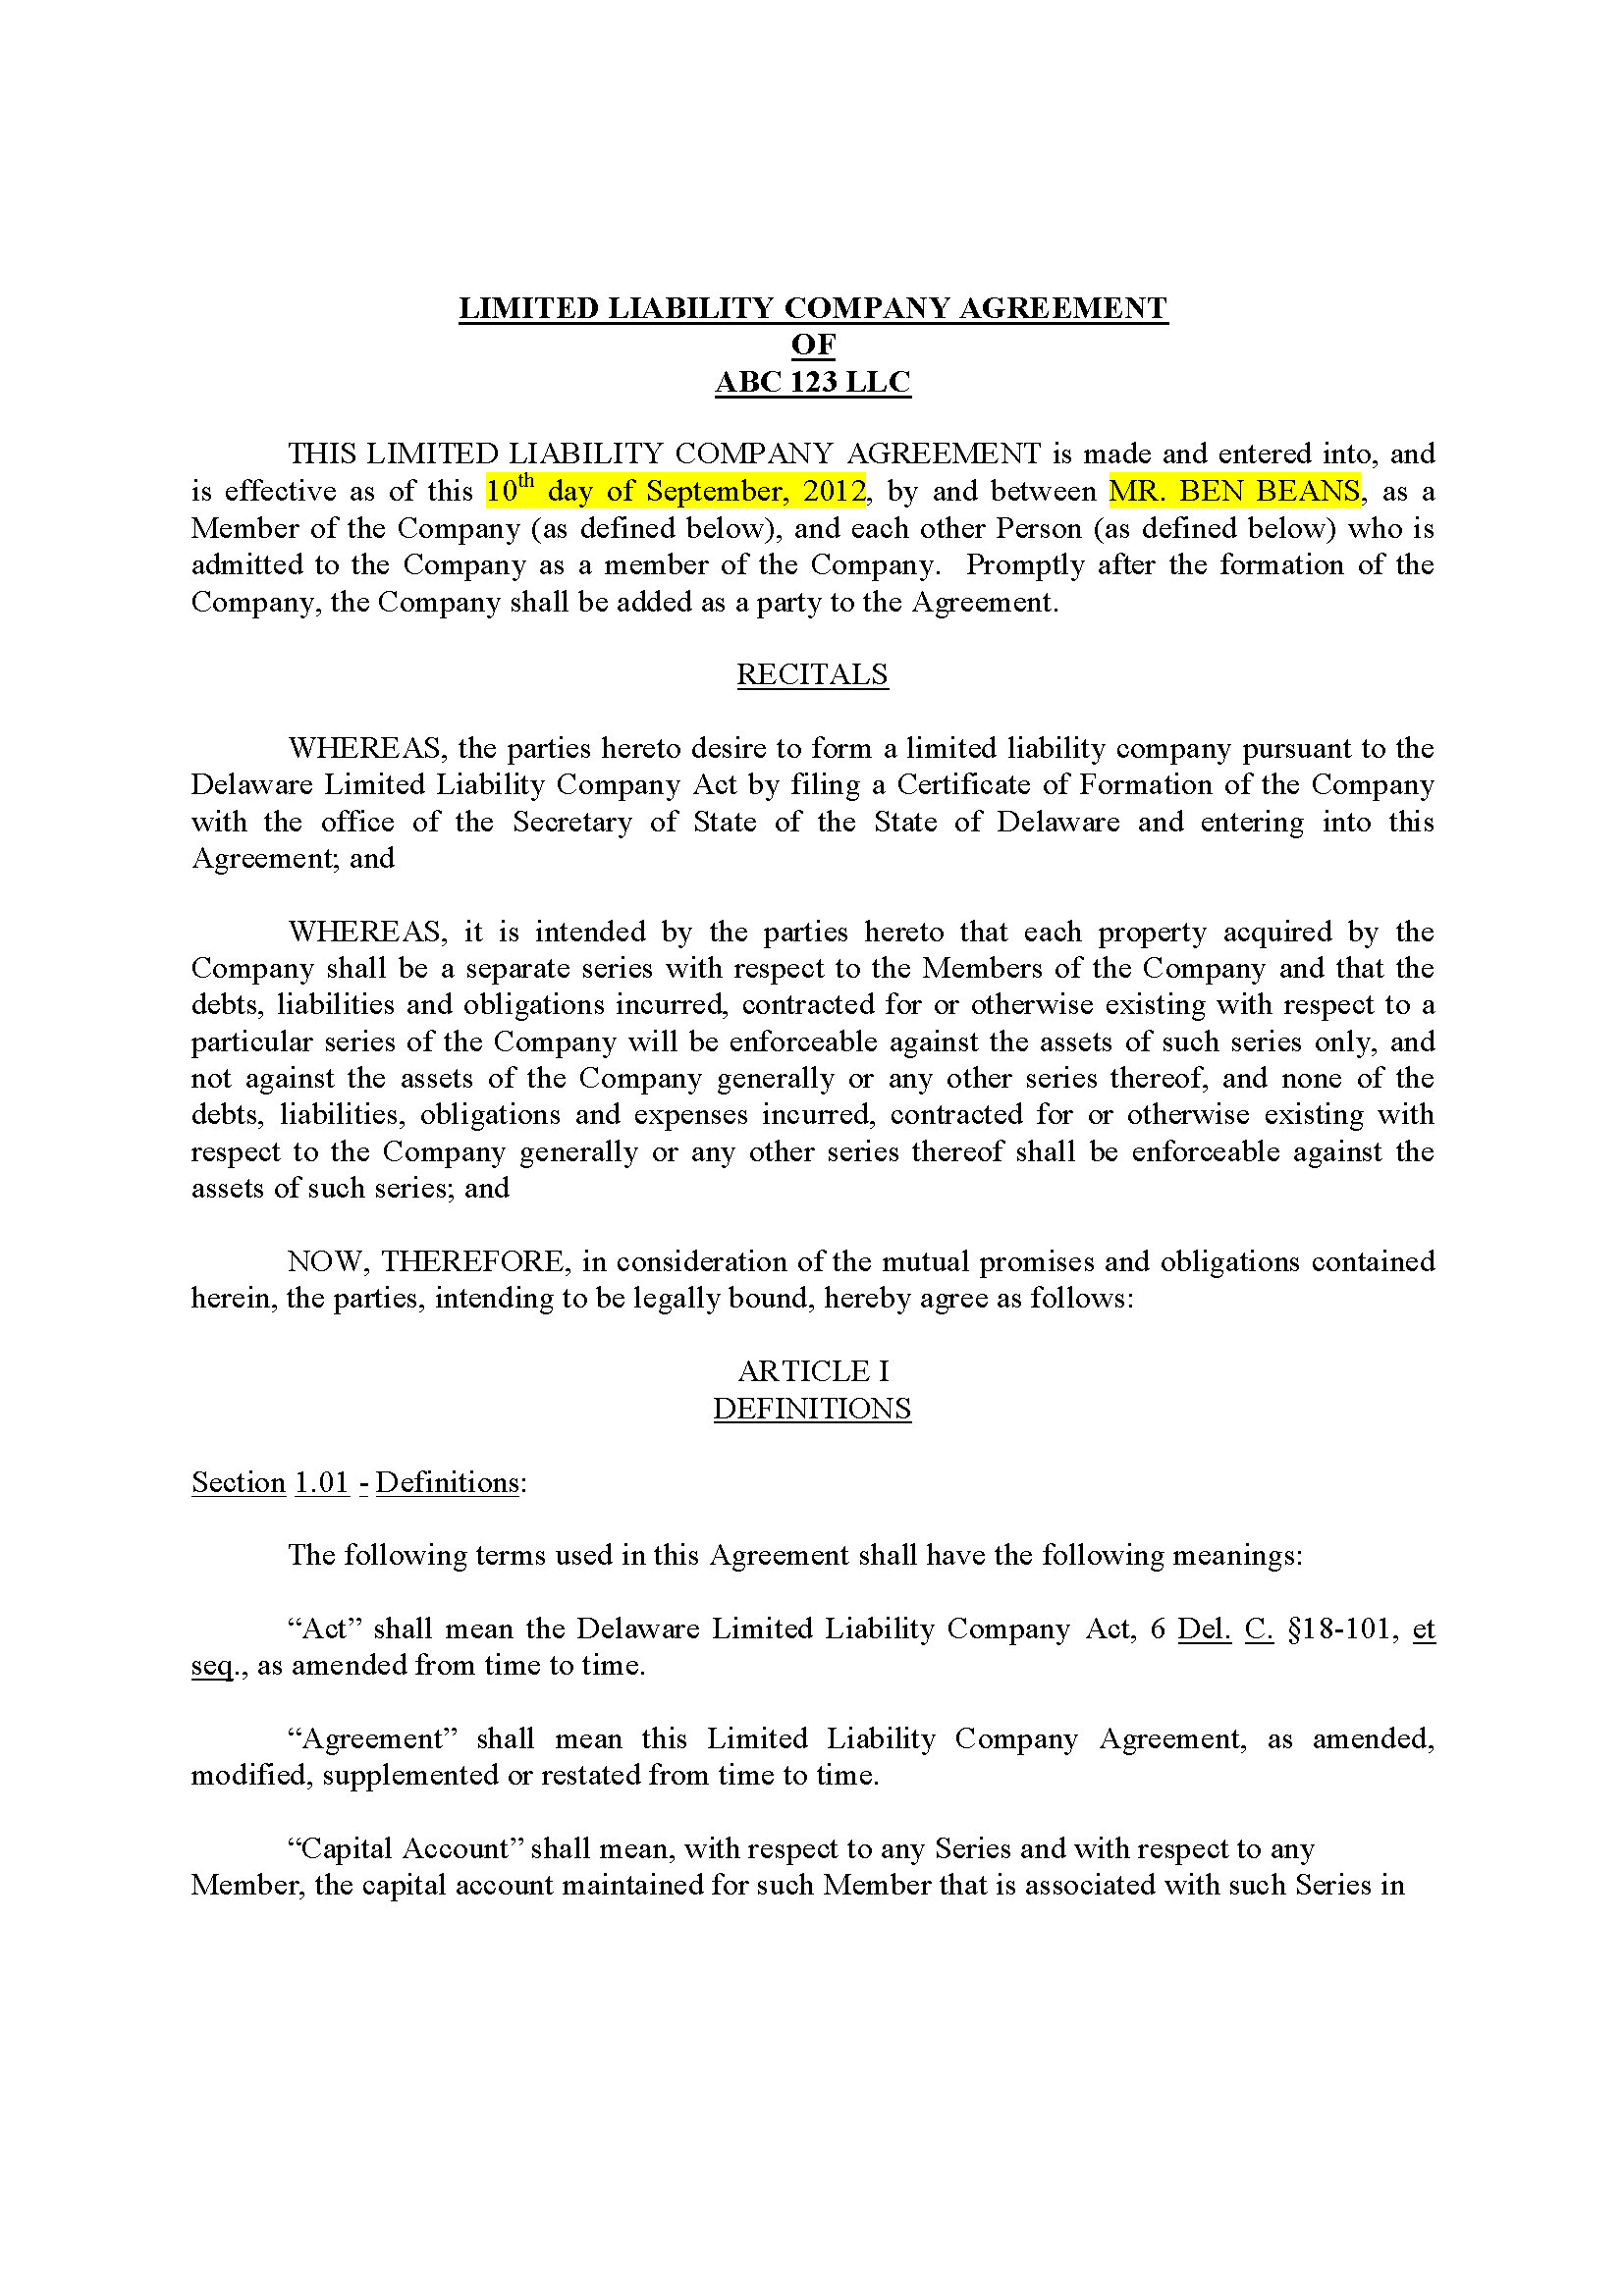 California LLC Operating Agreement (34 pg)Private Placement Memorandum